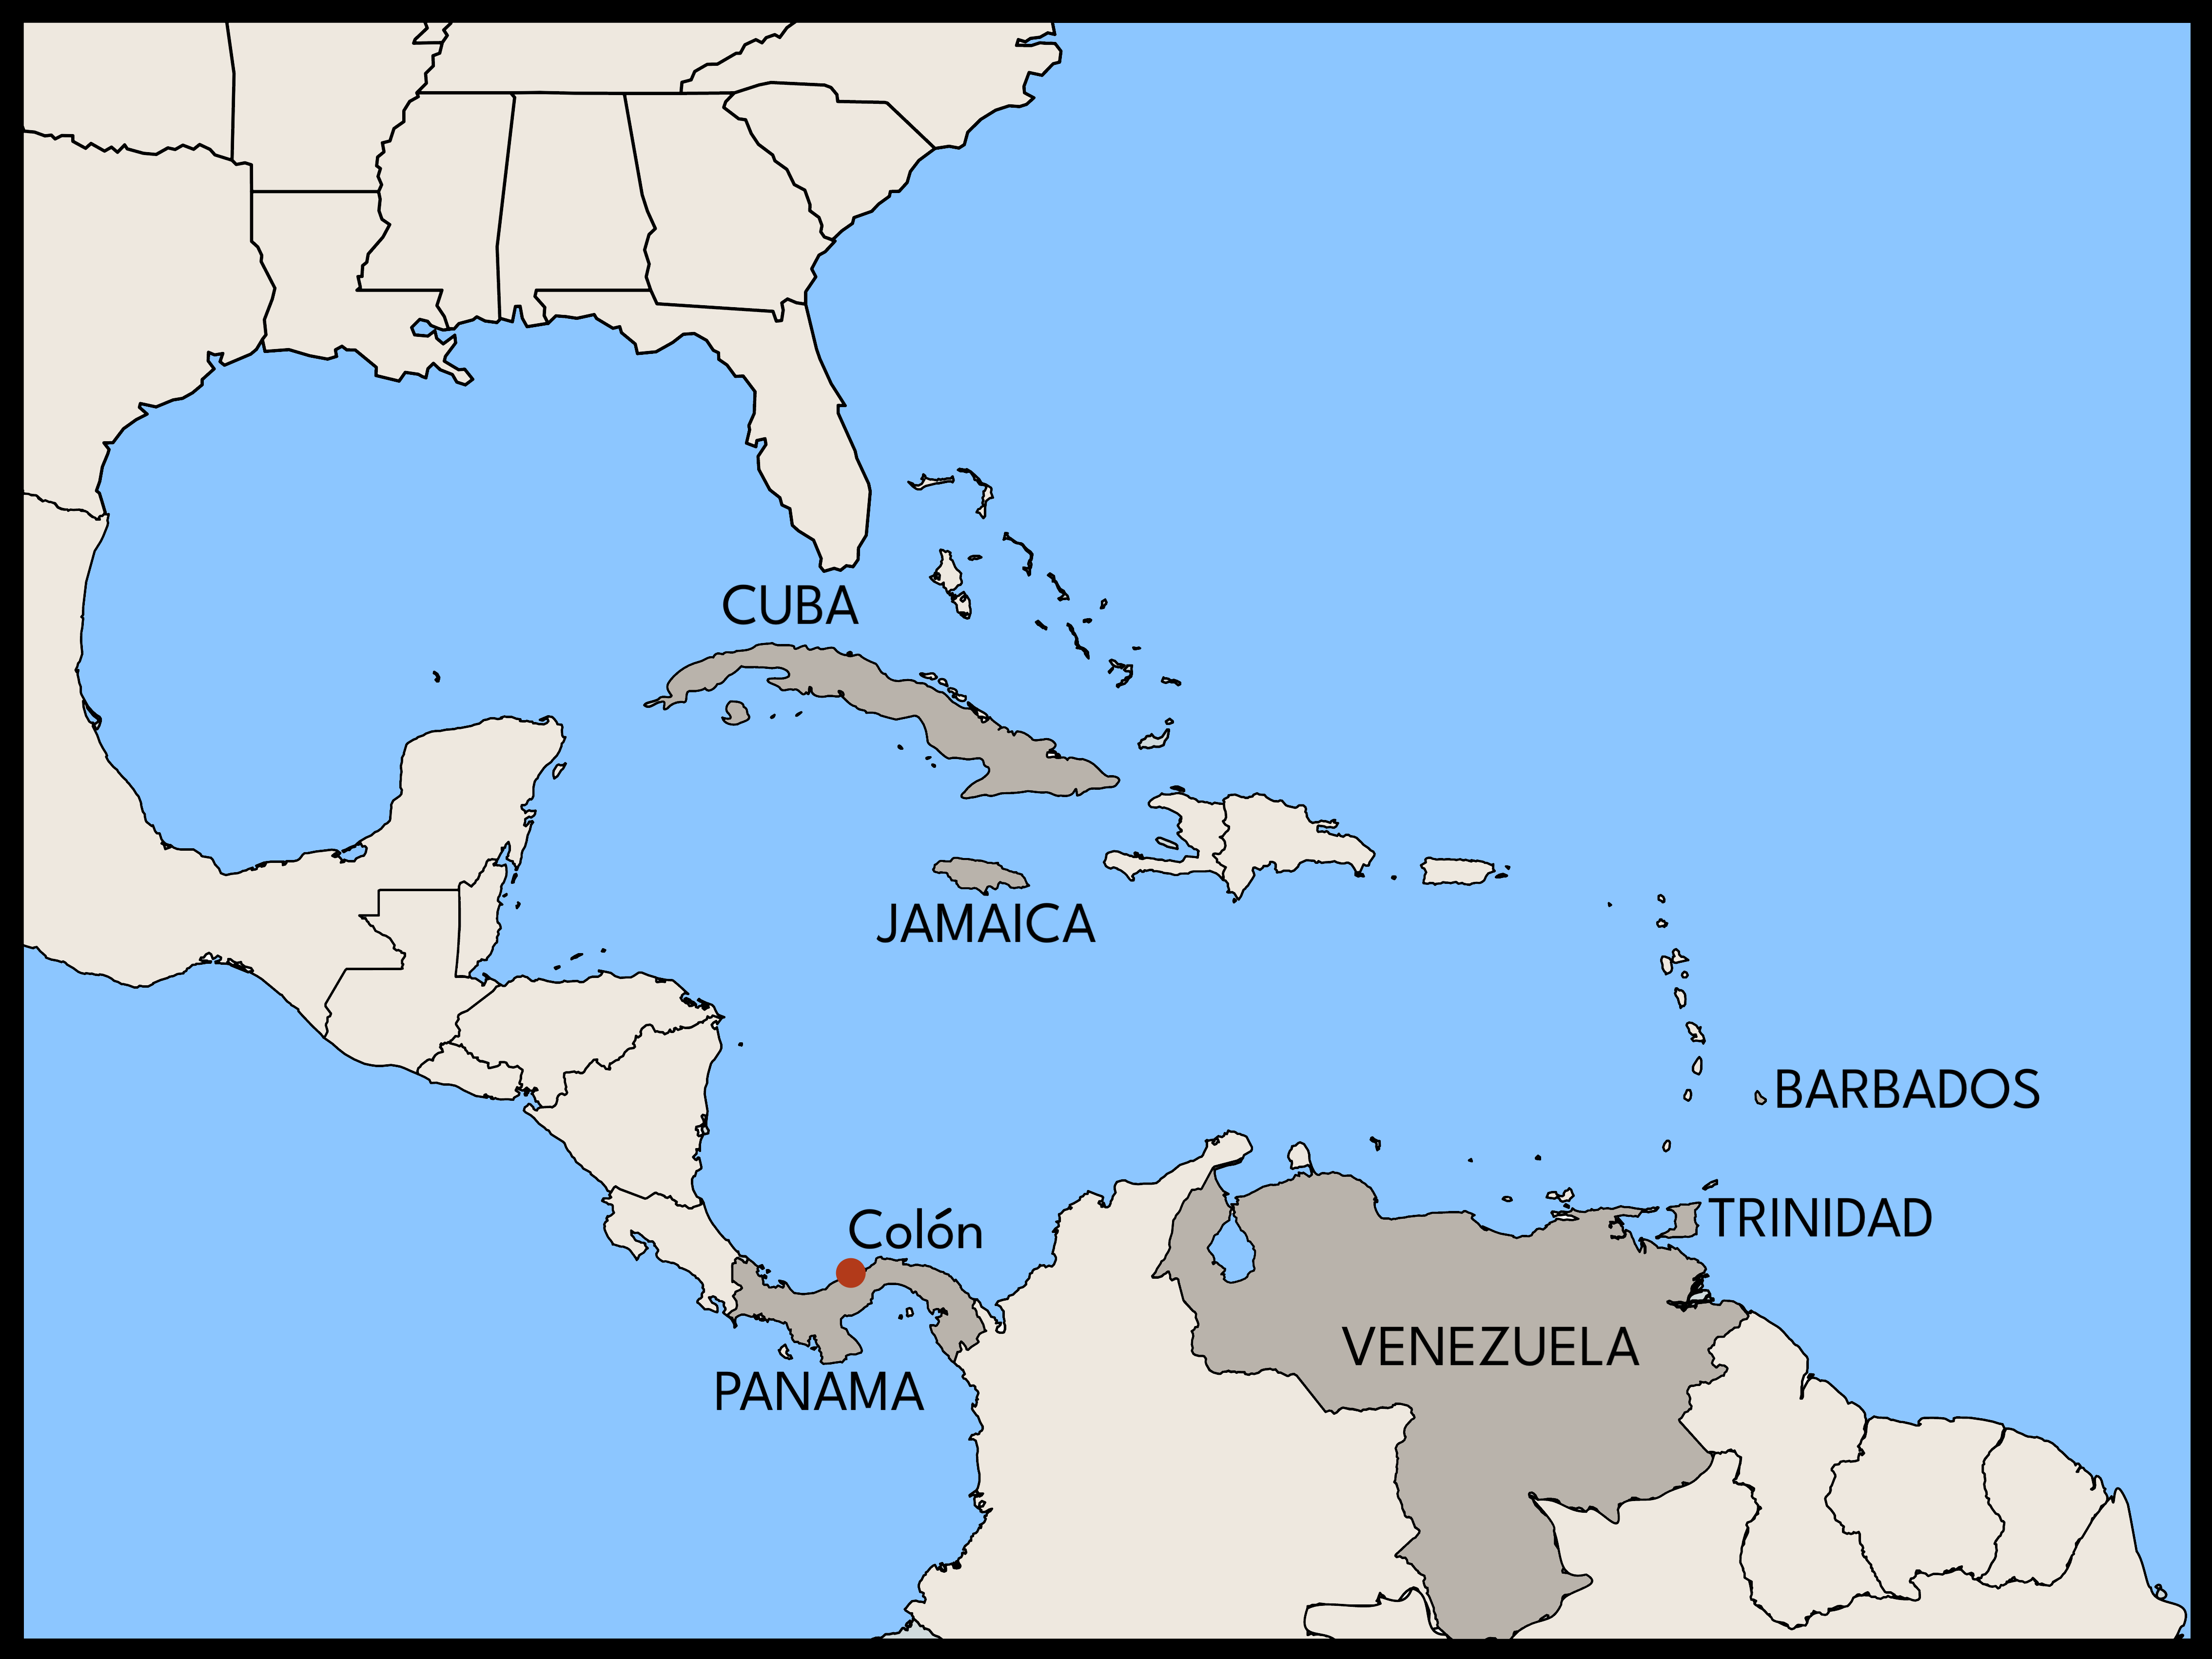 Map of the Caribbean highlighting Cuba, Jamaica, Colón, Panama, Barbados, Trinidad, and Venezuela.